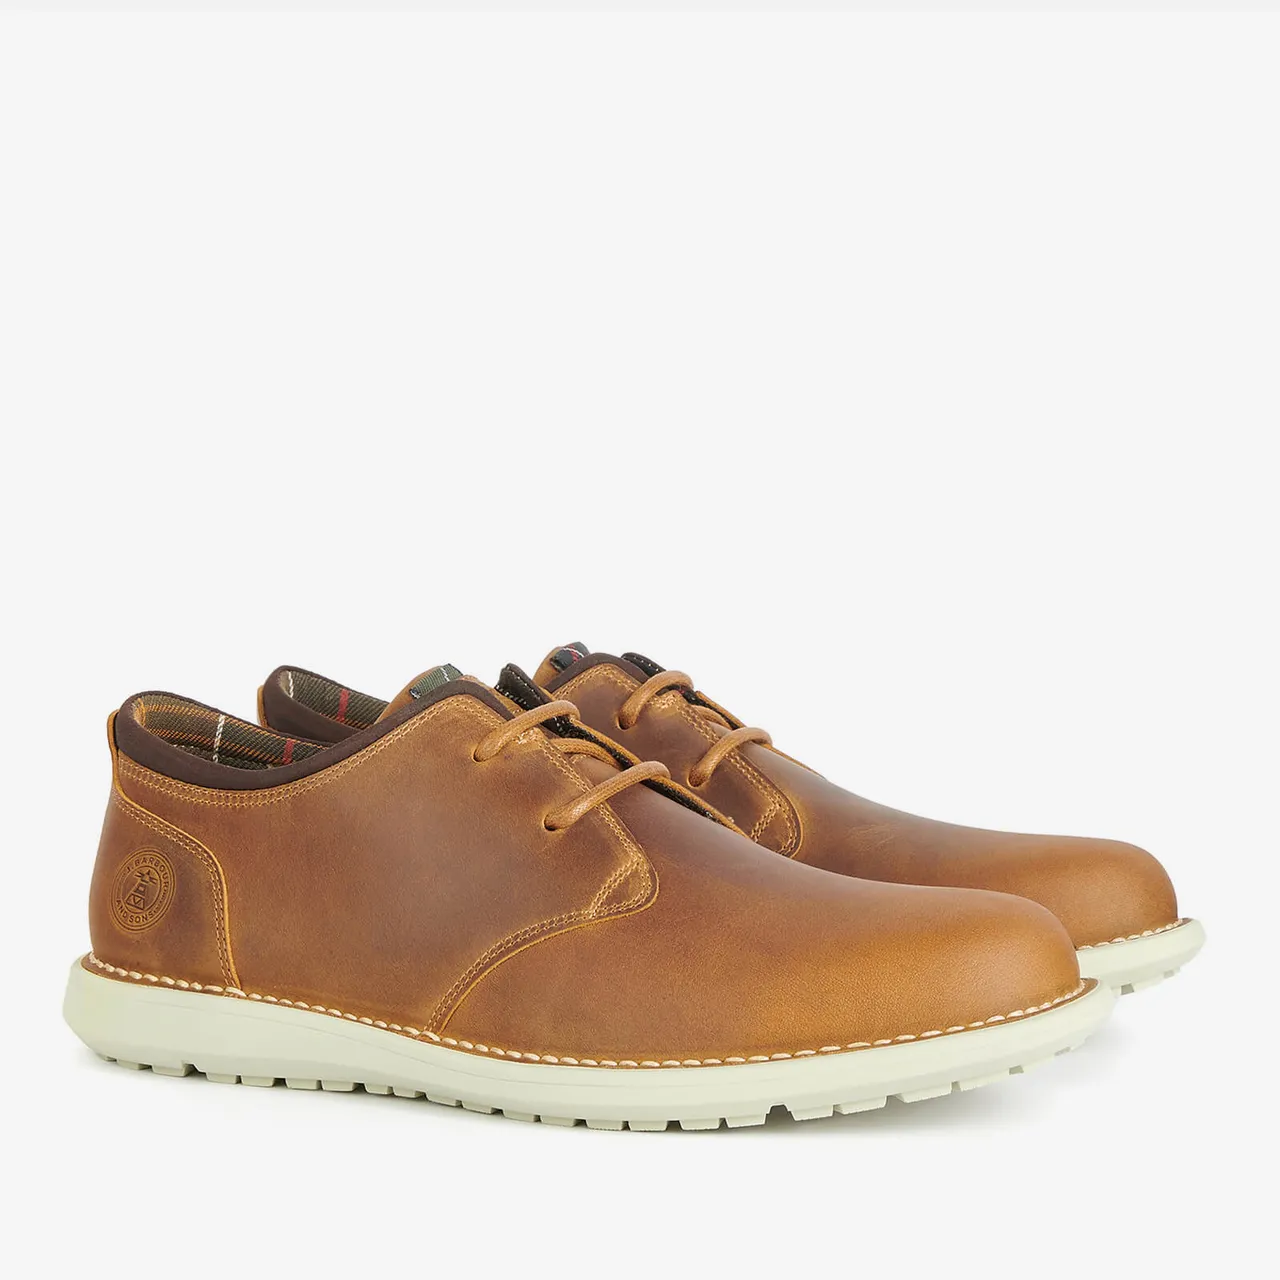 Barbour Men's Acer Leather Derby Shoes - UK